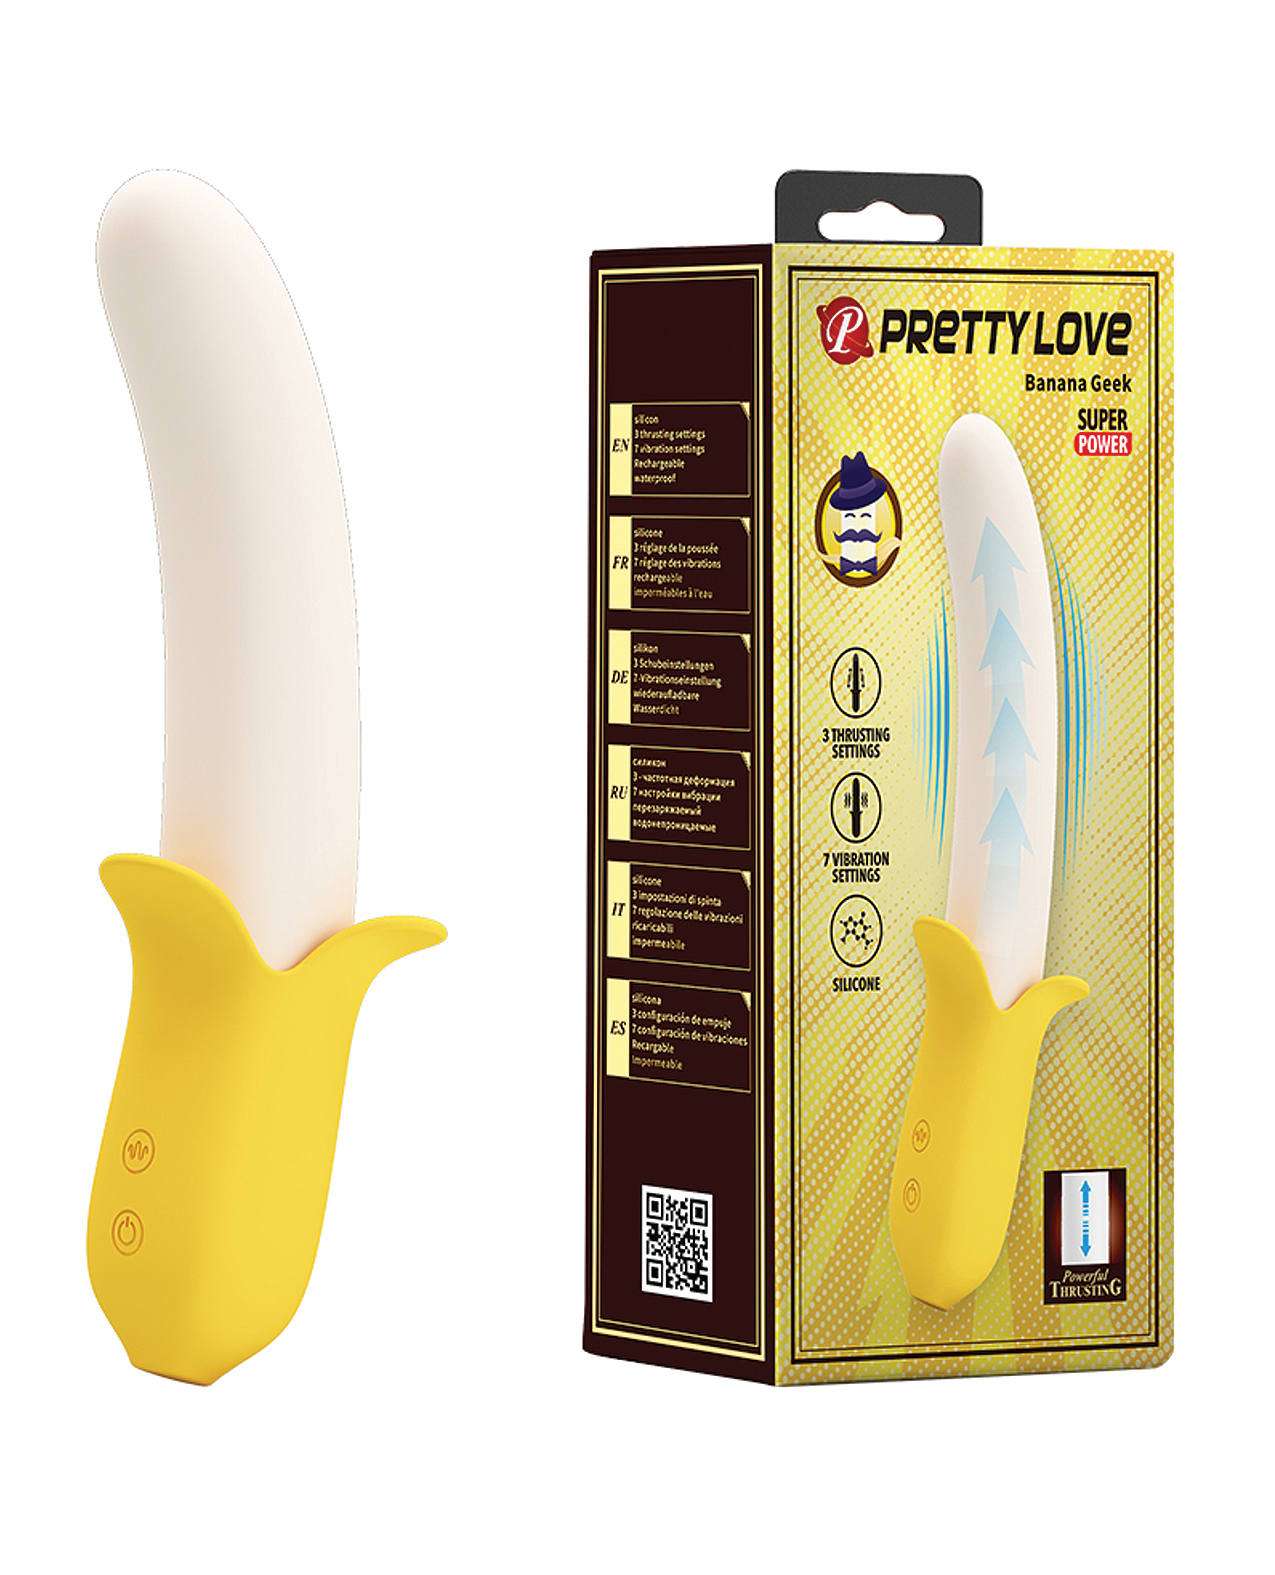 Pretty Love Banana shaped Thrusting Vibrator with a yellow bottom